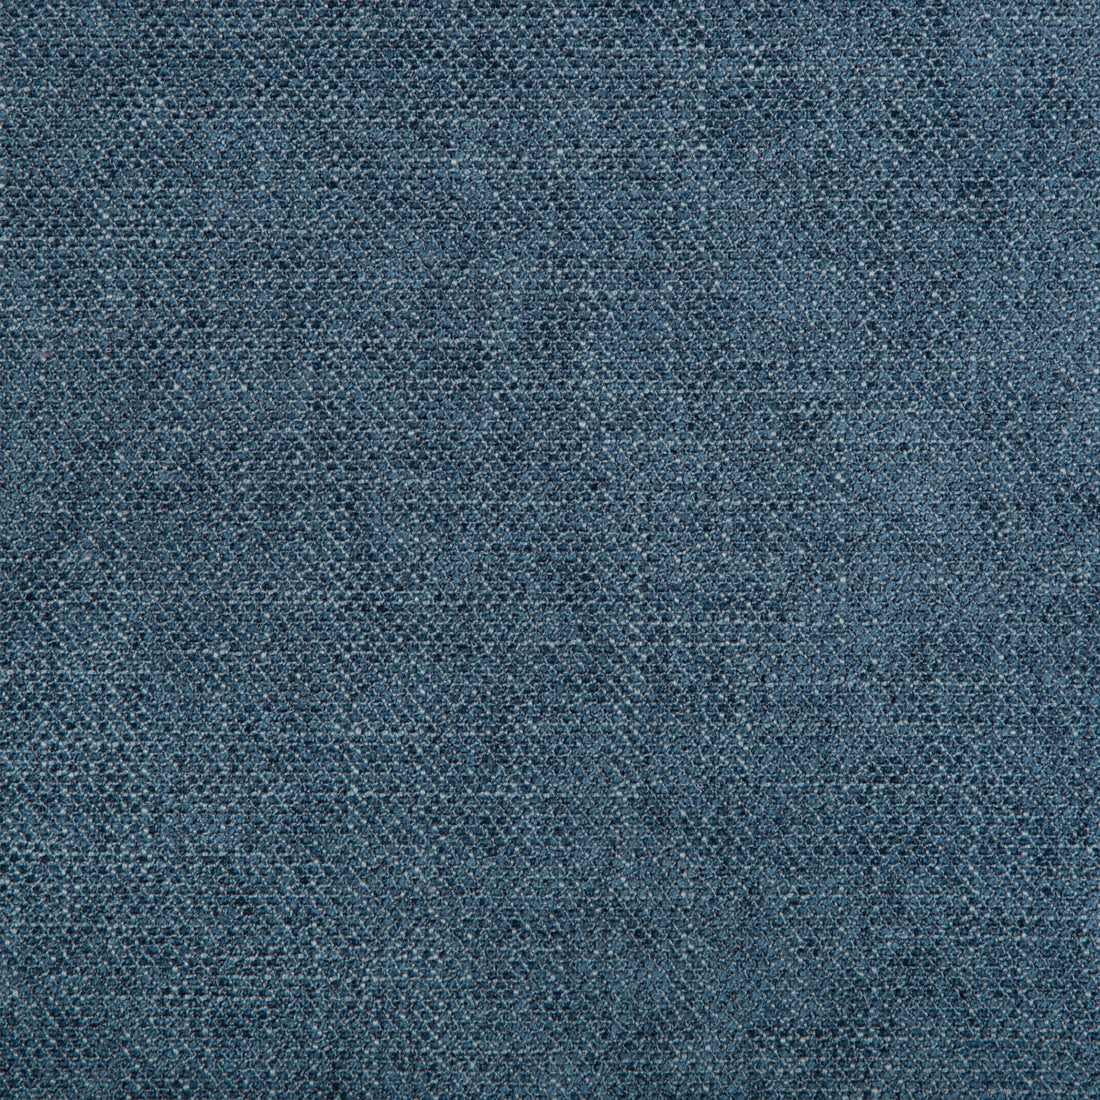 Kf Smt fabric - pattern 35060.505.0 - by Kravet Smart in the Performance Kravetarmor collection